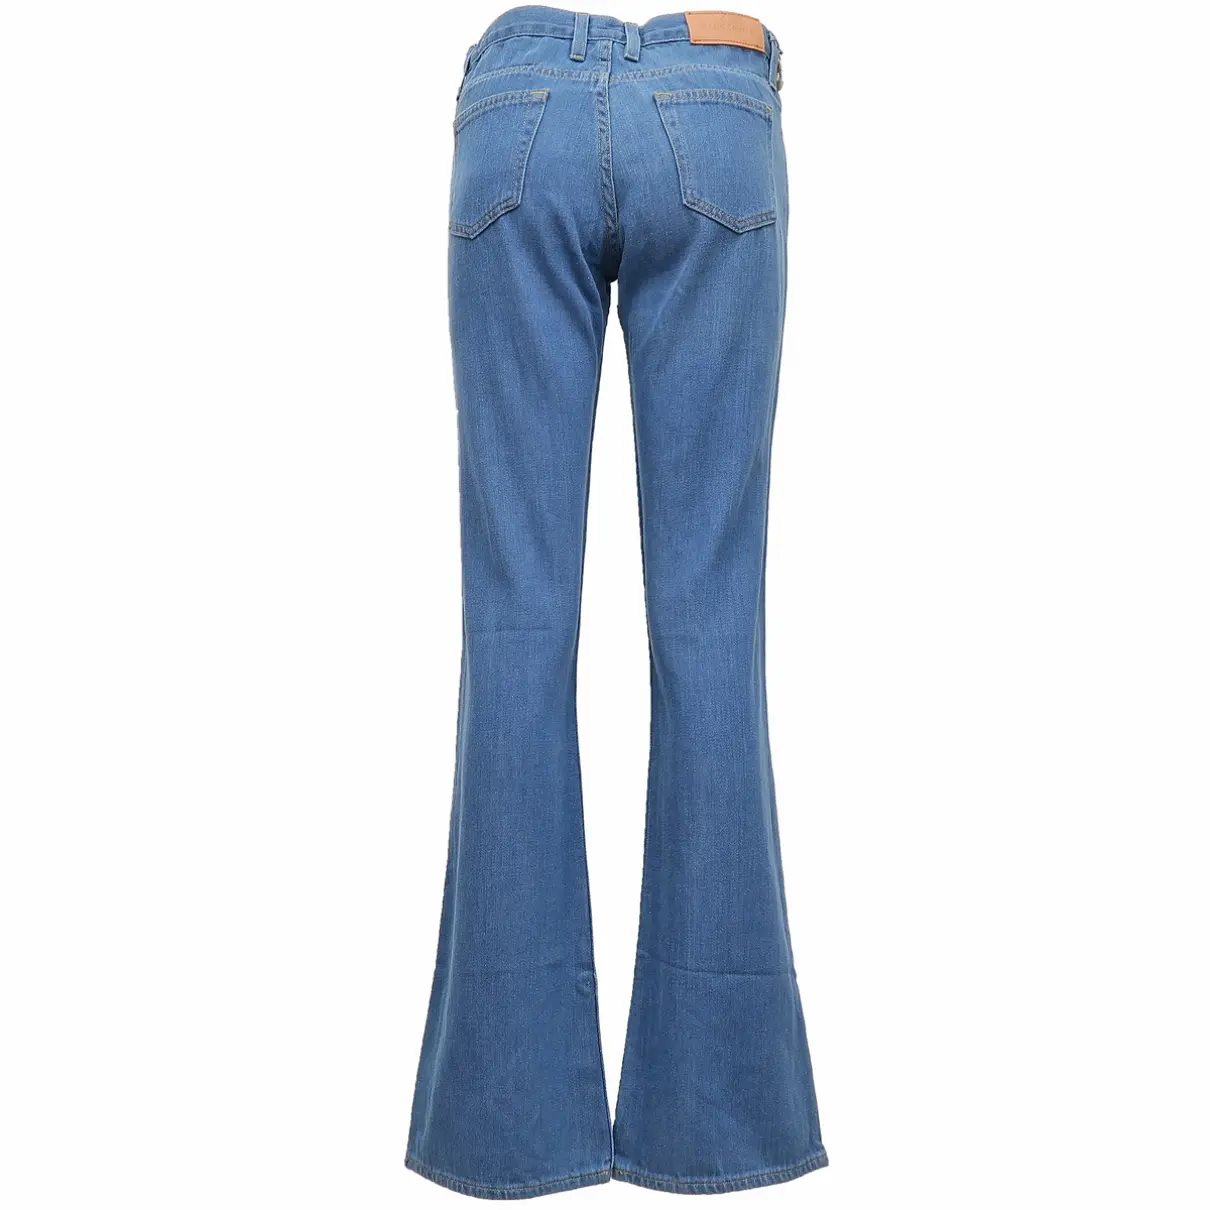 Buy Acne Studios Bootcut jeans online